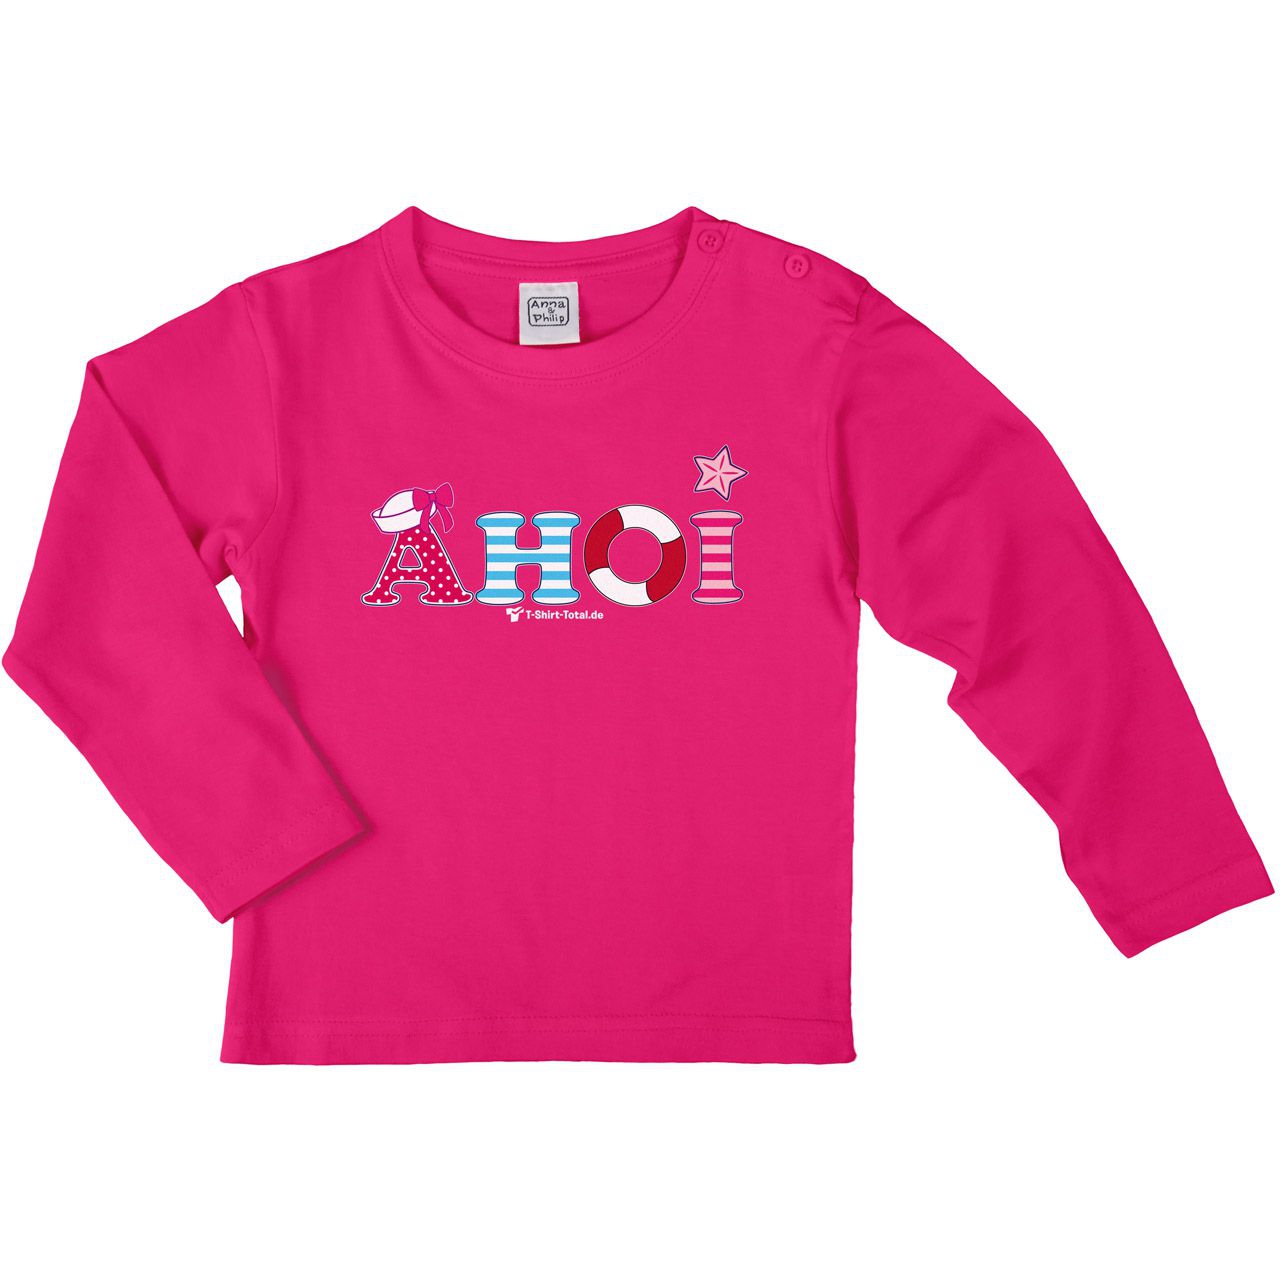 Ahoi Schleife Kinder Langarm Shirt pink 104